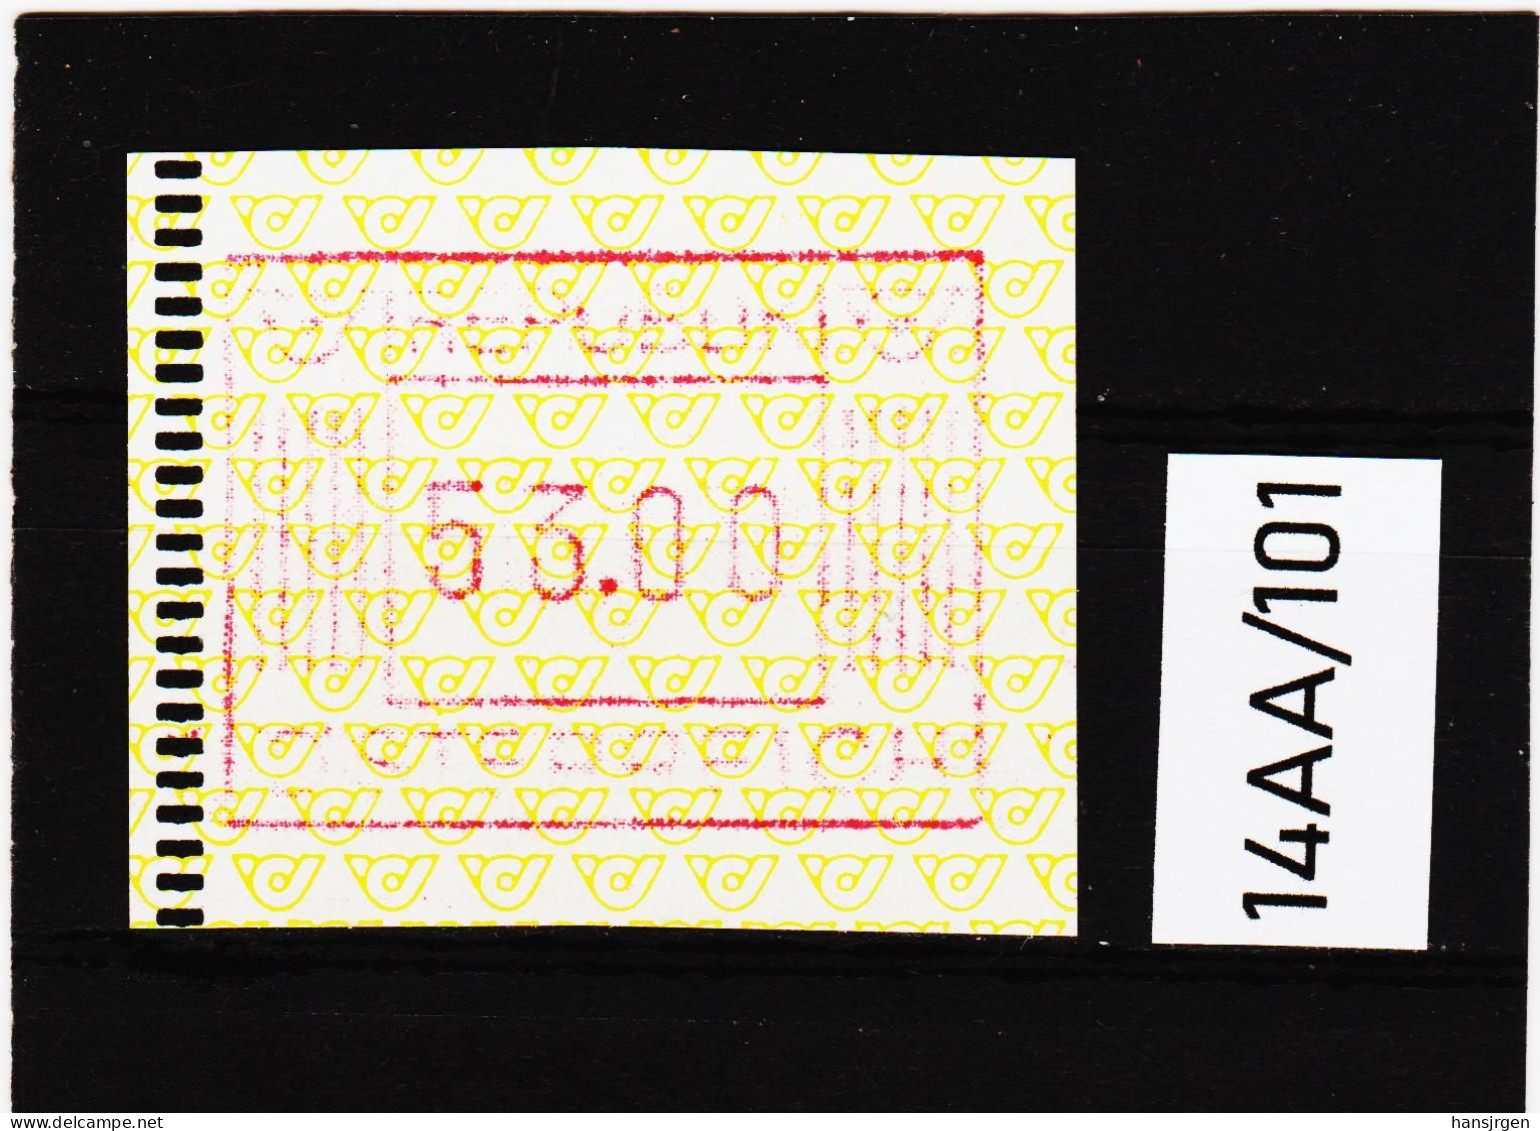 14AA/101  ÖSTERREICH 1983 AUTOMATENMARKEN 1. AUSGABE  53,00 SCHILLING   ** Postfrisch - Timbres De Distributeurs [ATM]